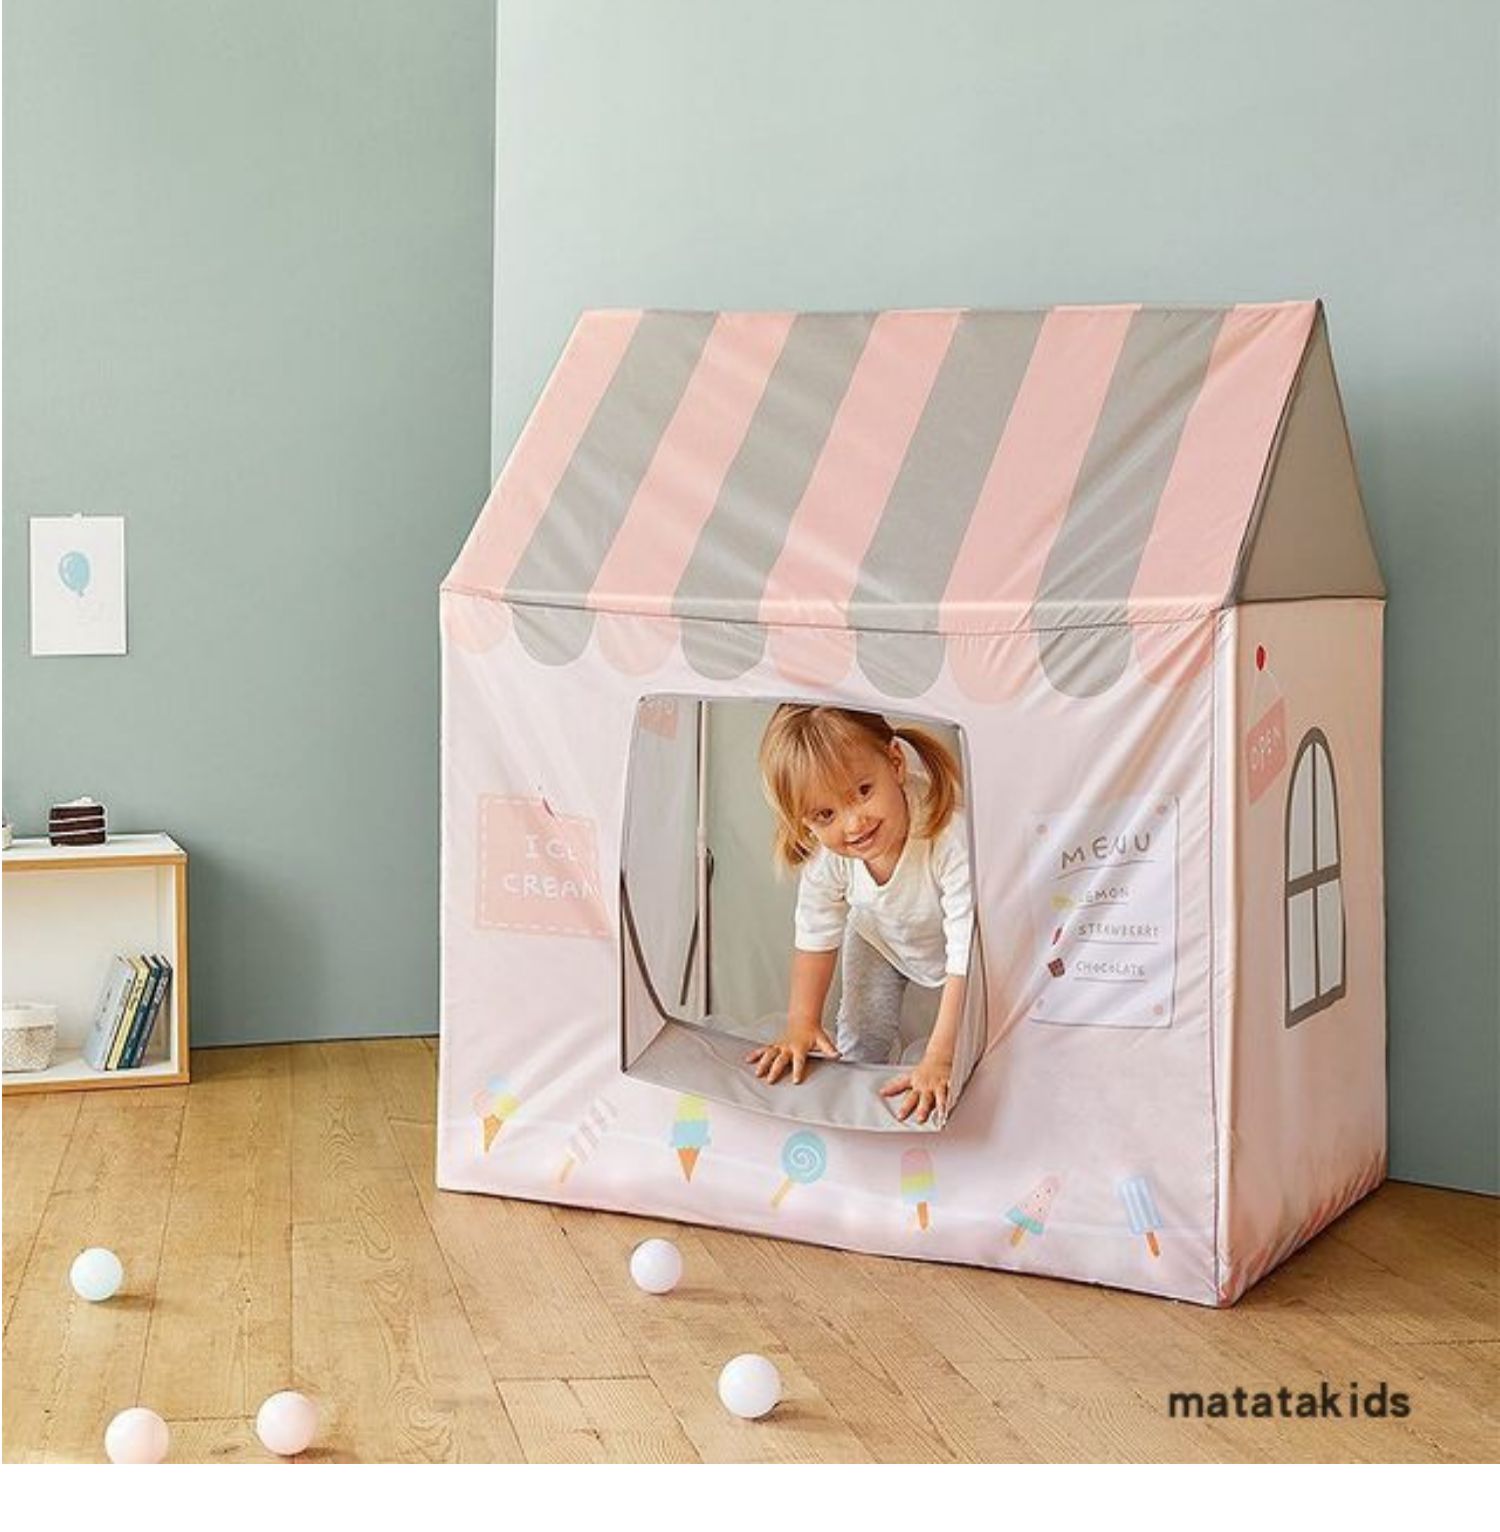 ins日韩男孩女孩室内过家家恐龙小房子便携折叠式帐篷游戏玩具屋